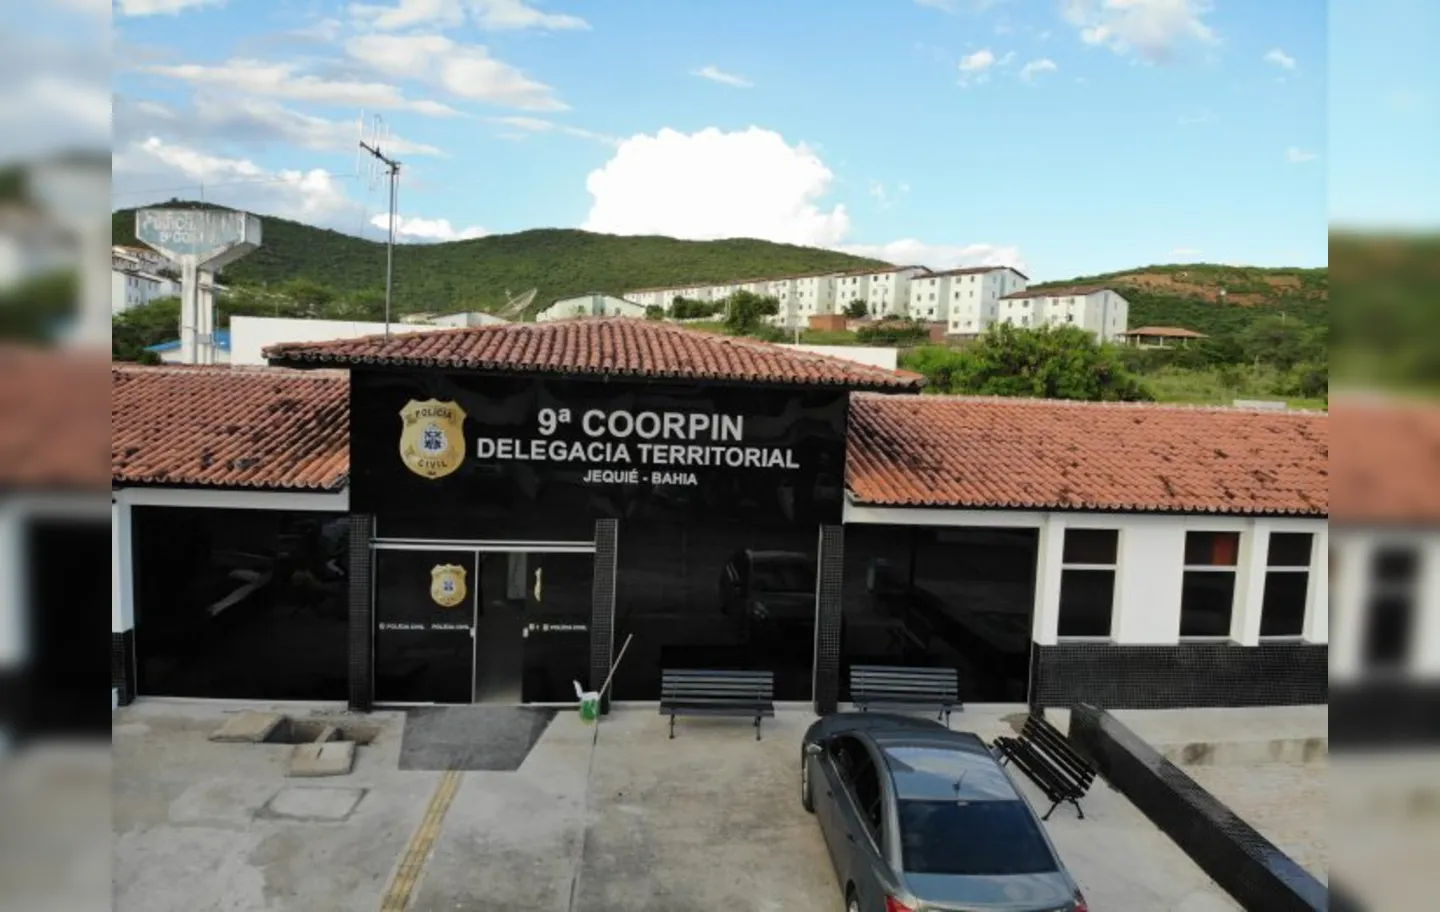 Mandado foi cumprido por policiais da DEAM, que fica no complexo de delegacias da 9ª Coorpin.